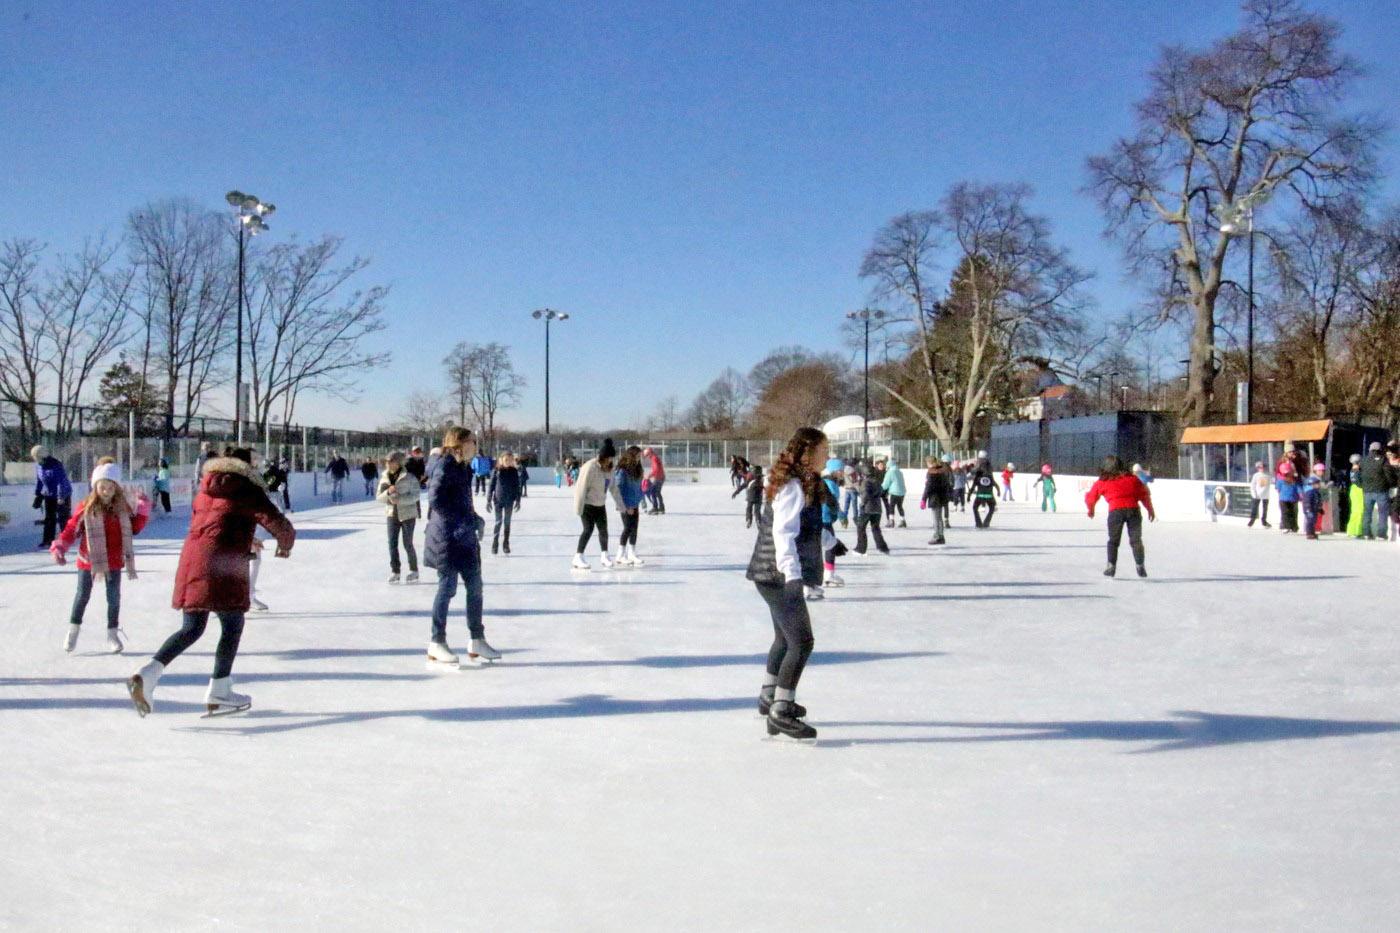 Westport citizens skate into the winter season